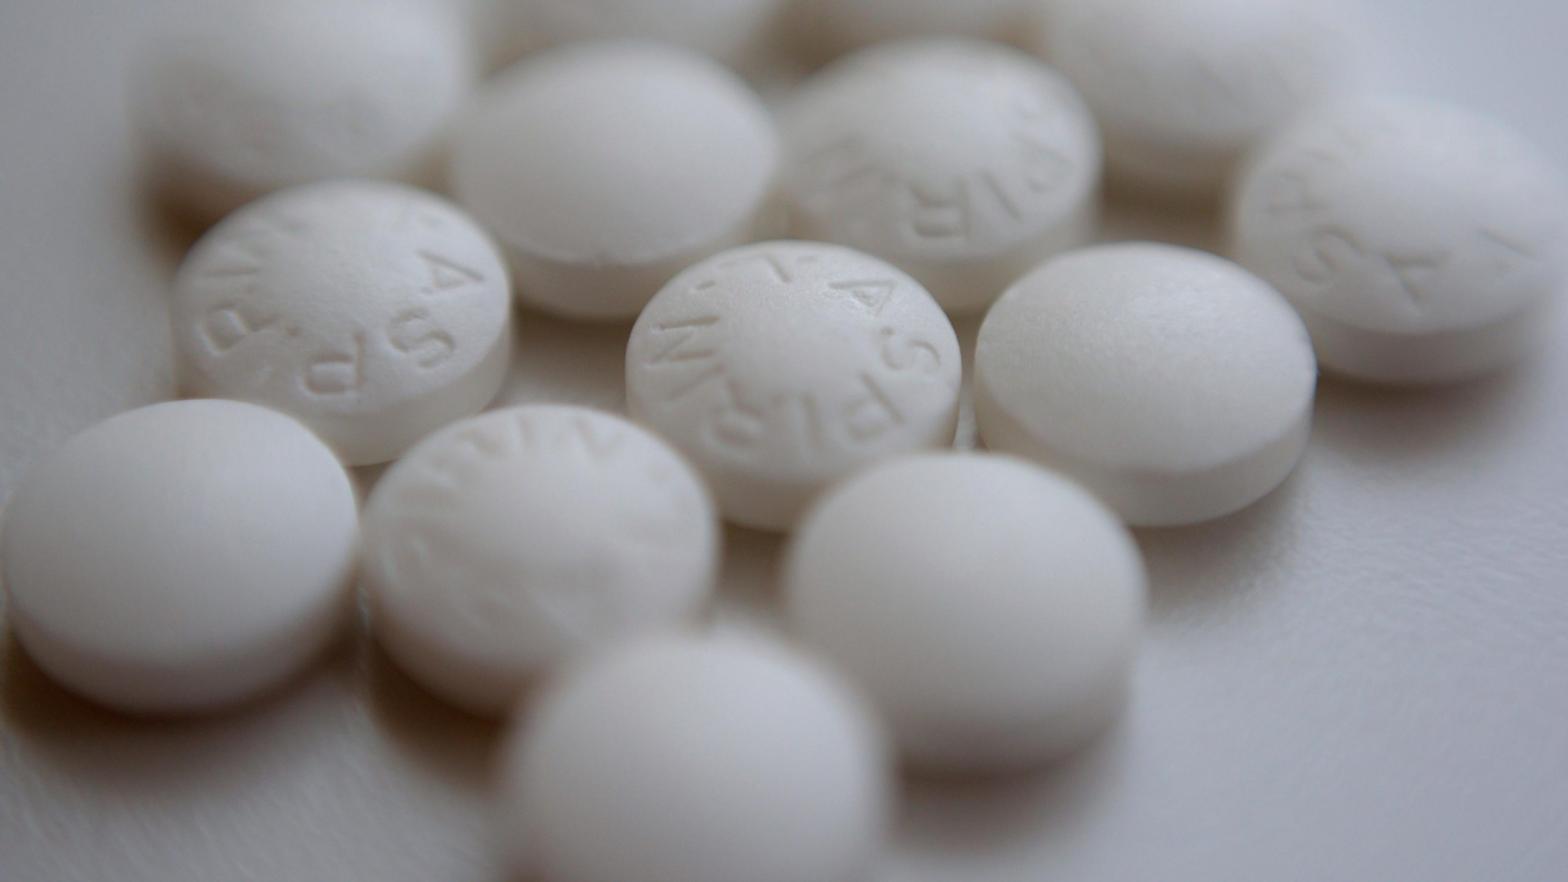 Aspirin pills. (Photo: Patrick Sison, AP)